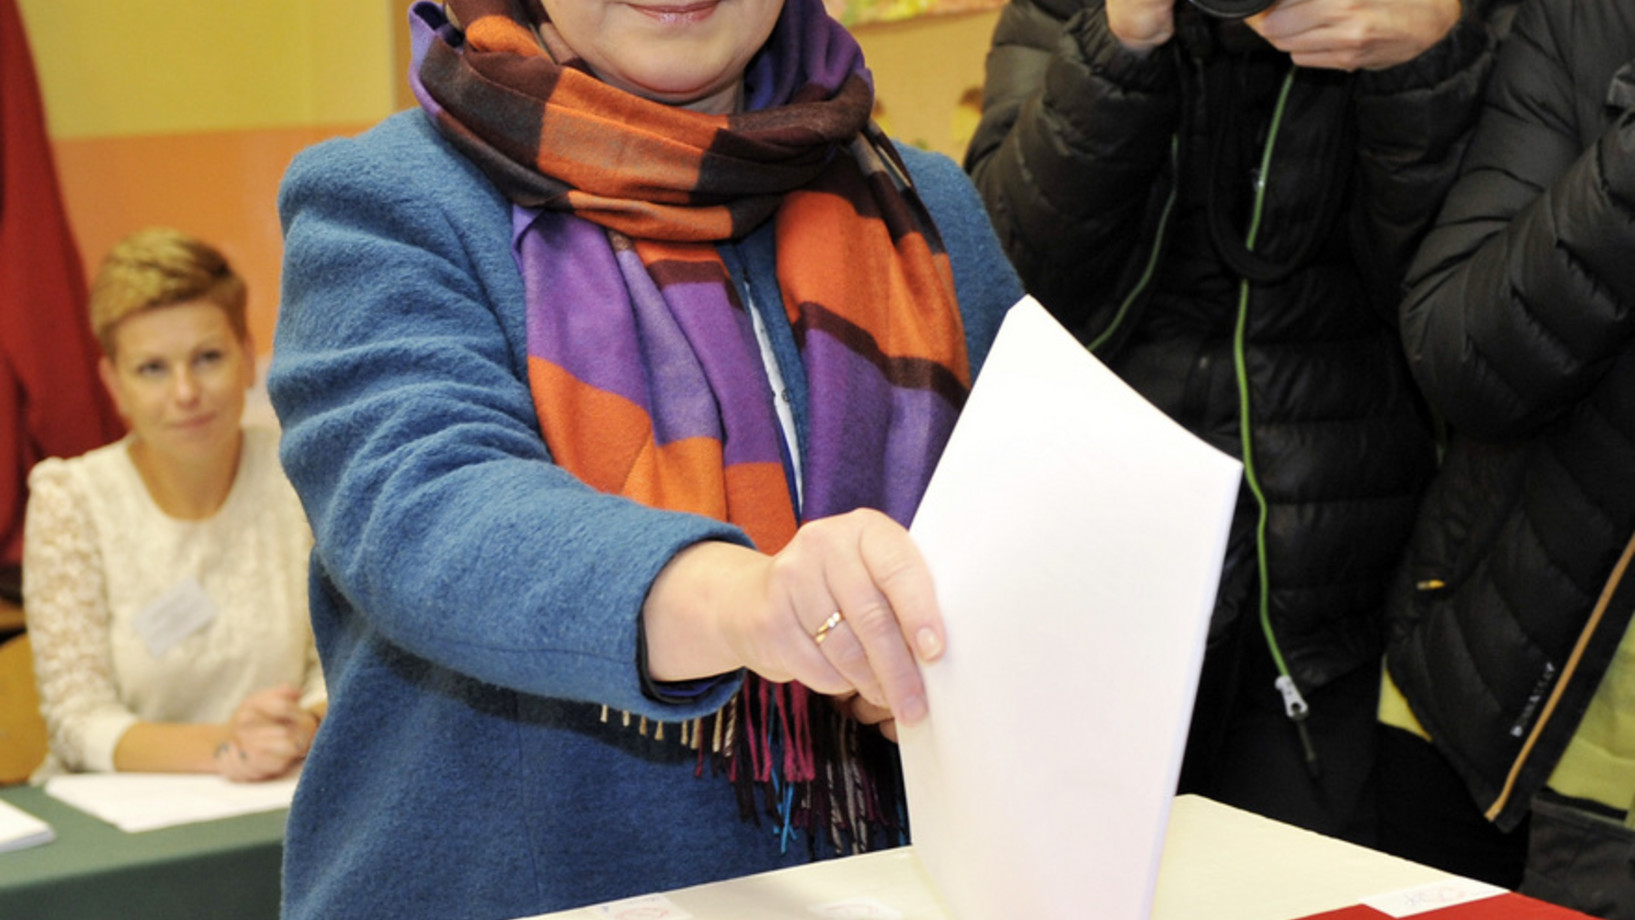 Beata Szydlo bei der Stimmabgabe am Sonntag in Przecieszyn (Foto: Keystone/AP)